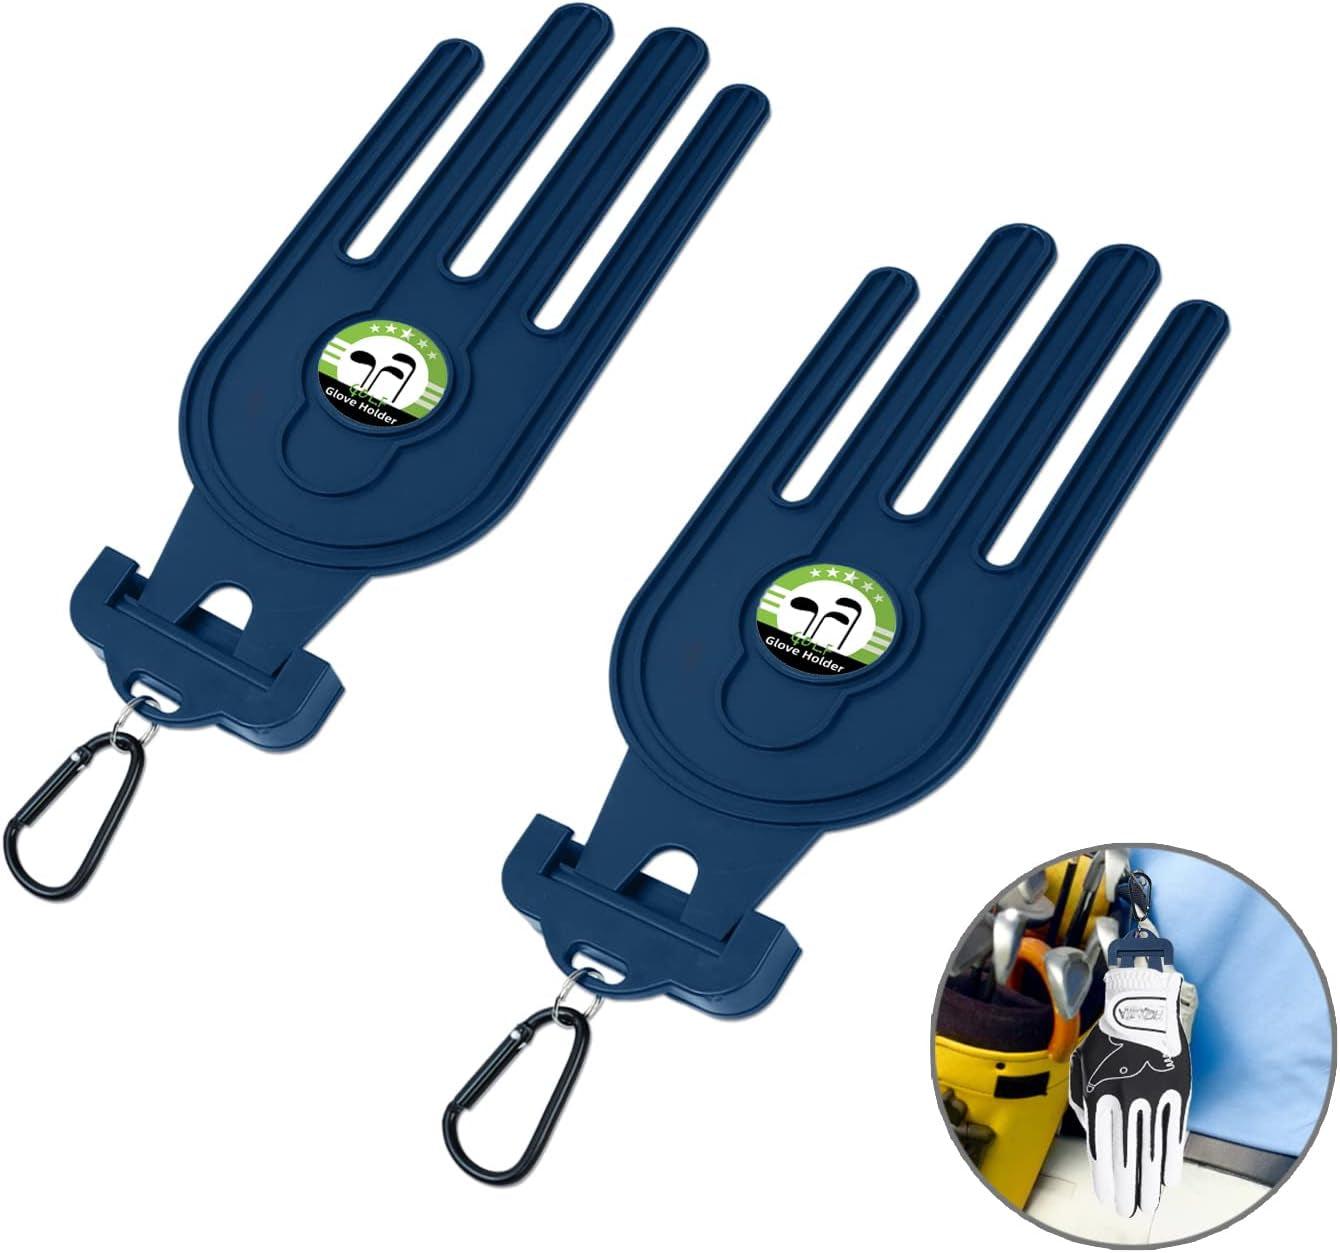 Spring Golf Glove Holder Stretcher, 2PCS Durable Glove Support Frame Dryer 